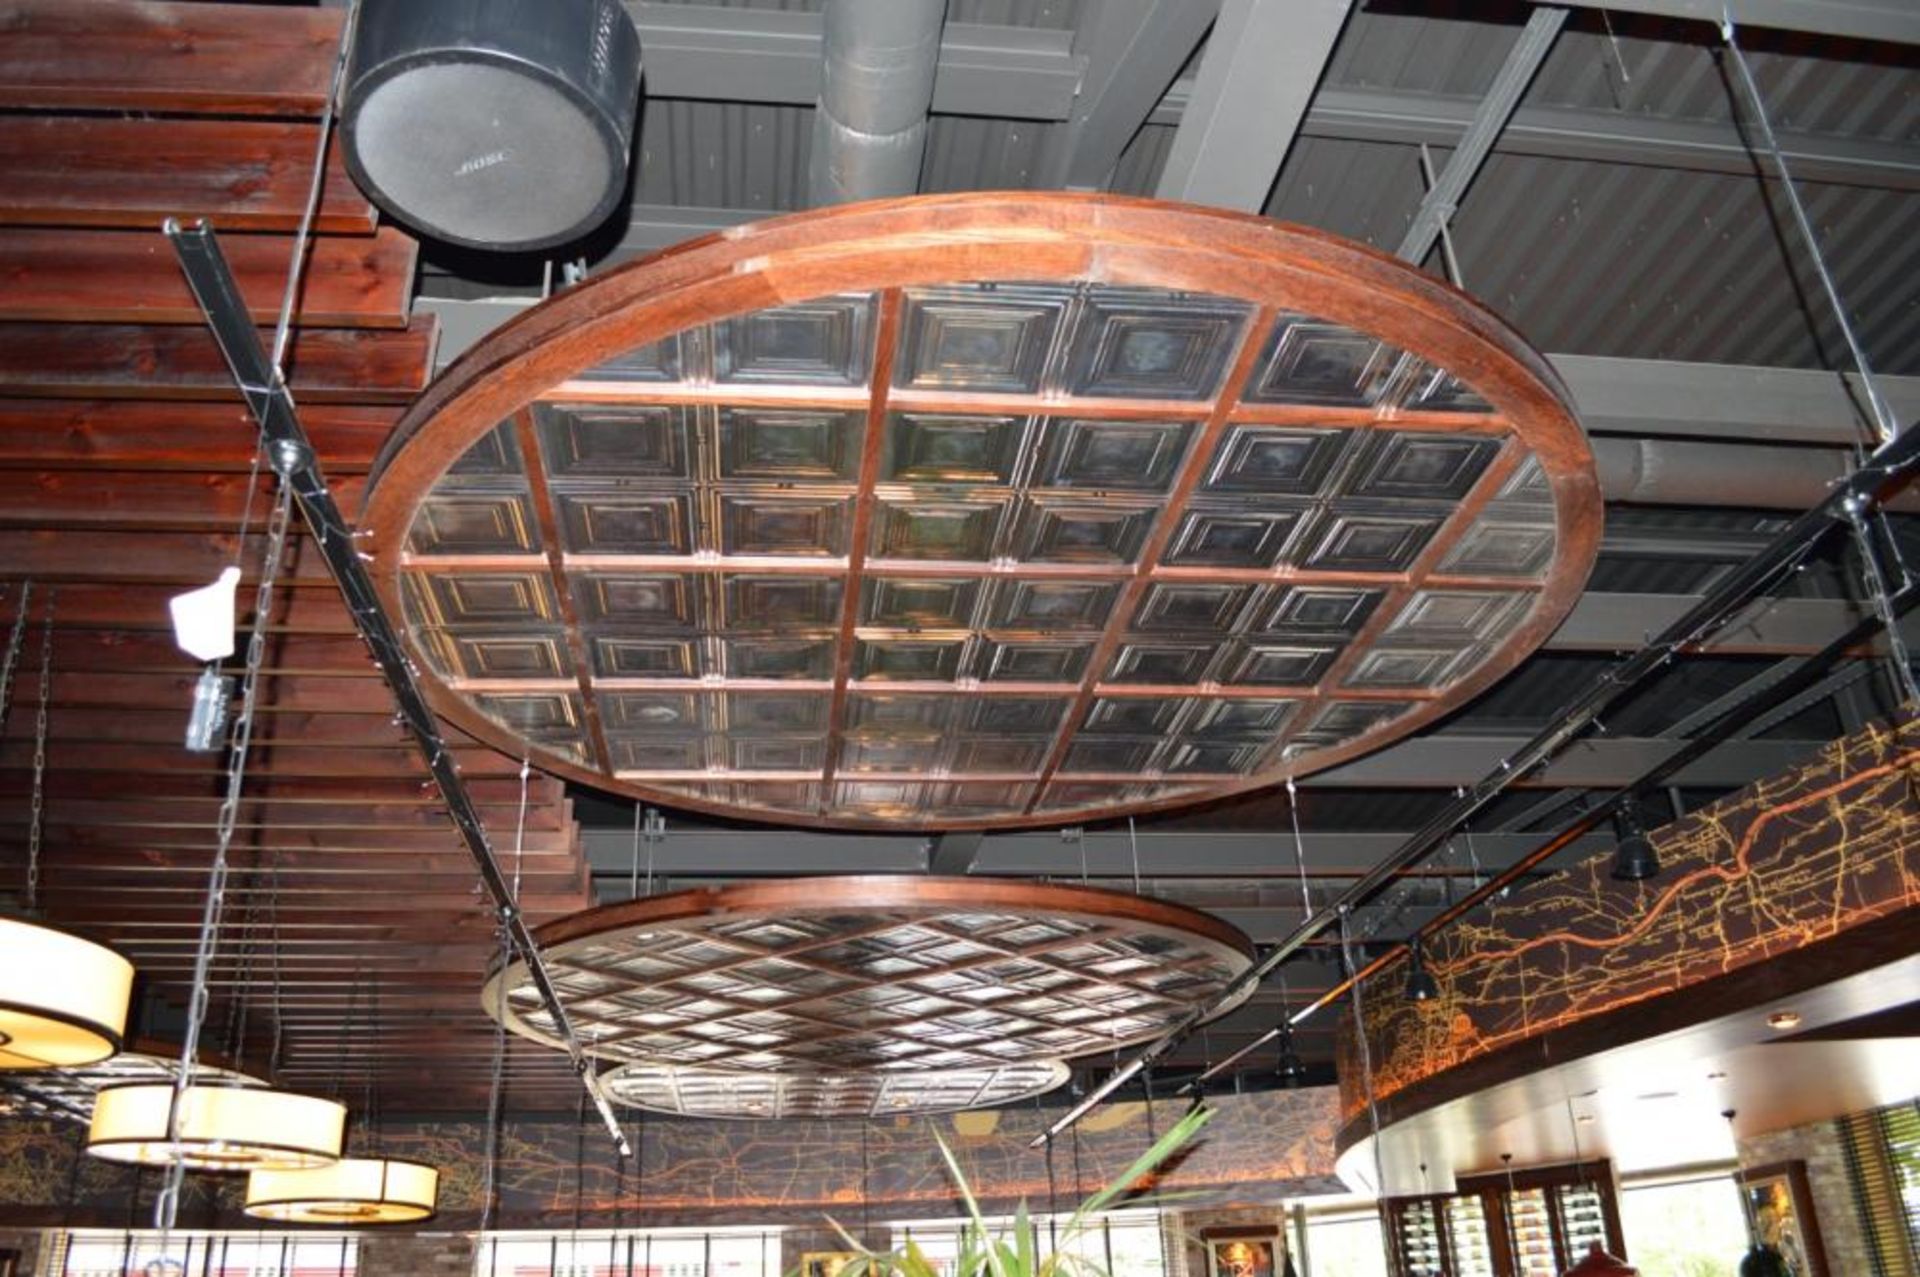 1 x Bespoke Suspended Round Ceiling Panel in Dark Wood With Glass Inserts - Approx 3 Meter - Bild 6 aus 6